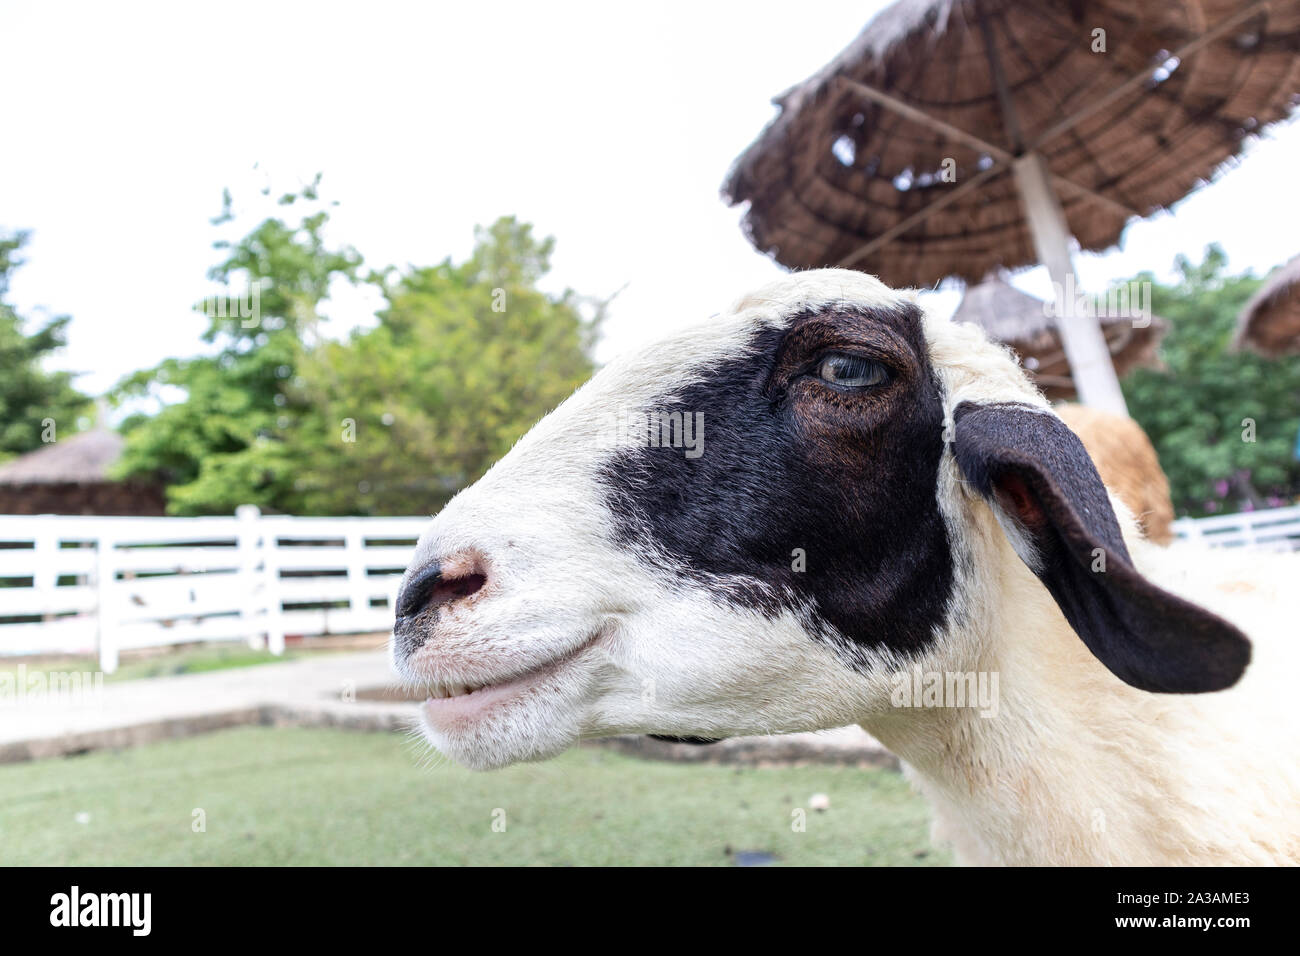 Sheep Funny Teeth Fotos e Imágenes de stock - Alamy